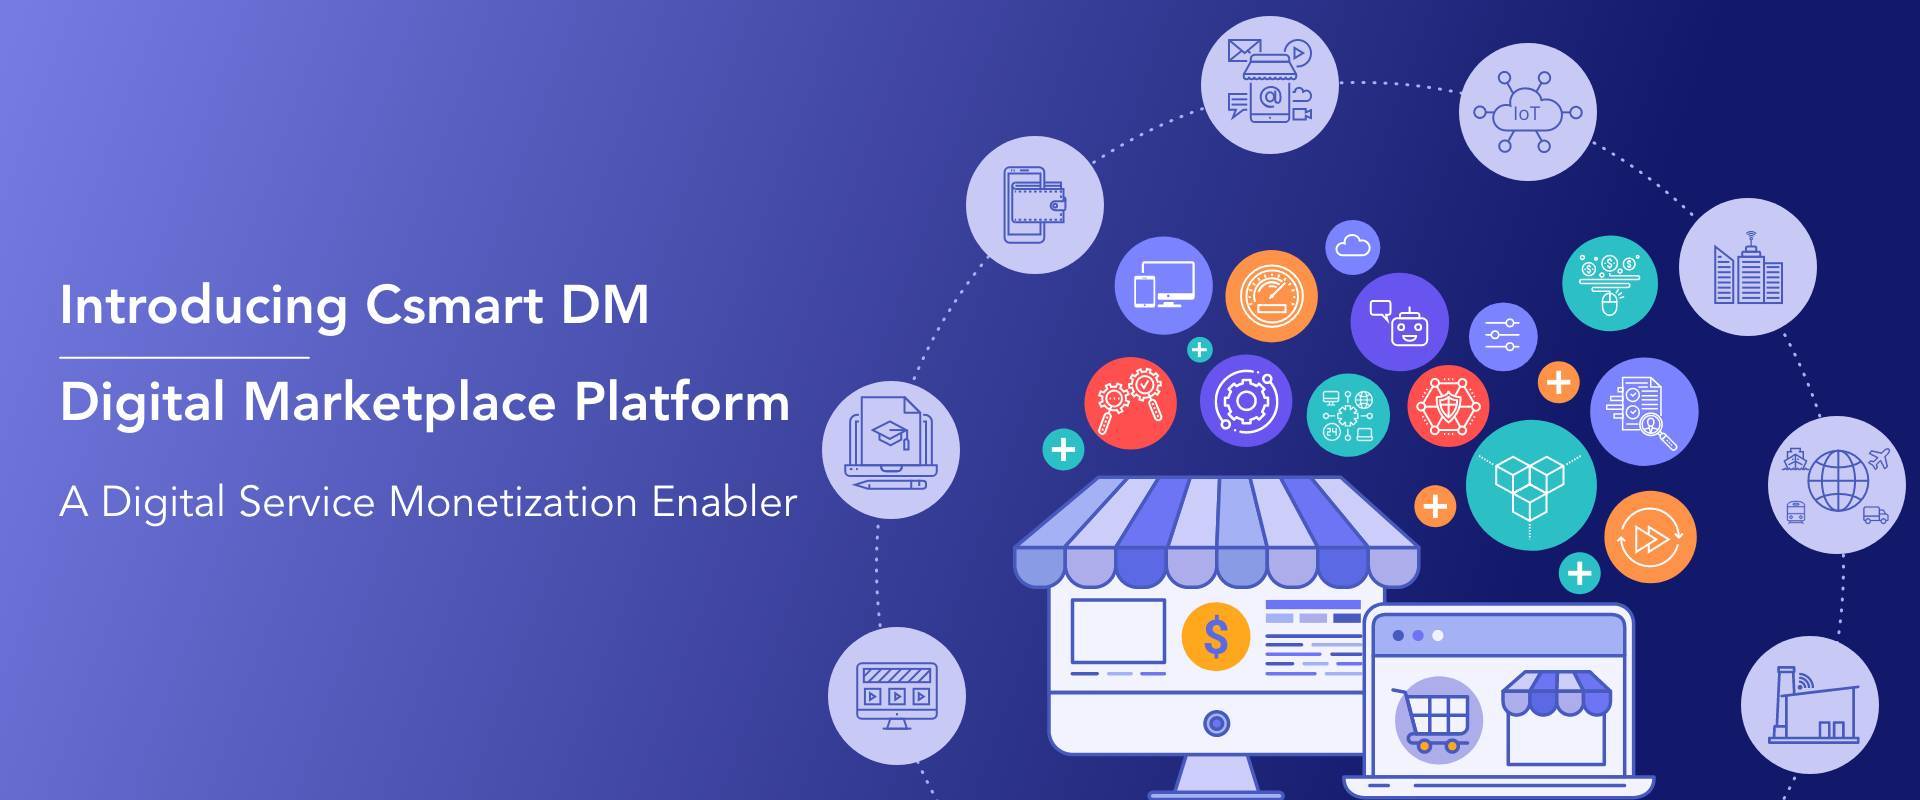 Introducing Csmart DM – Digital Marketplace Platform, A Digital Service Monetization Enabler